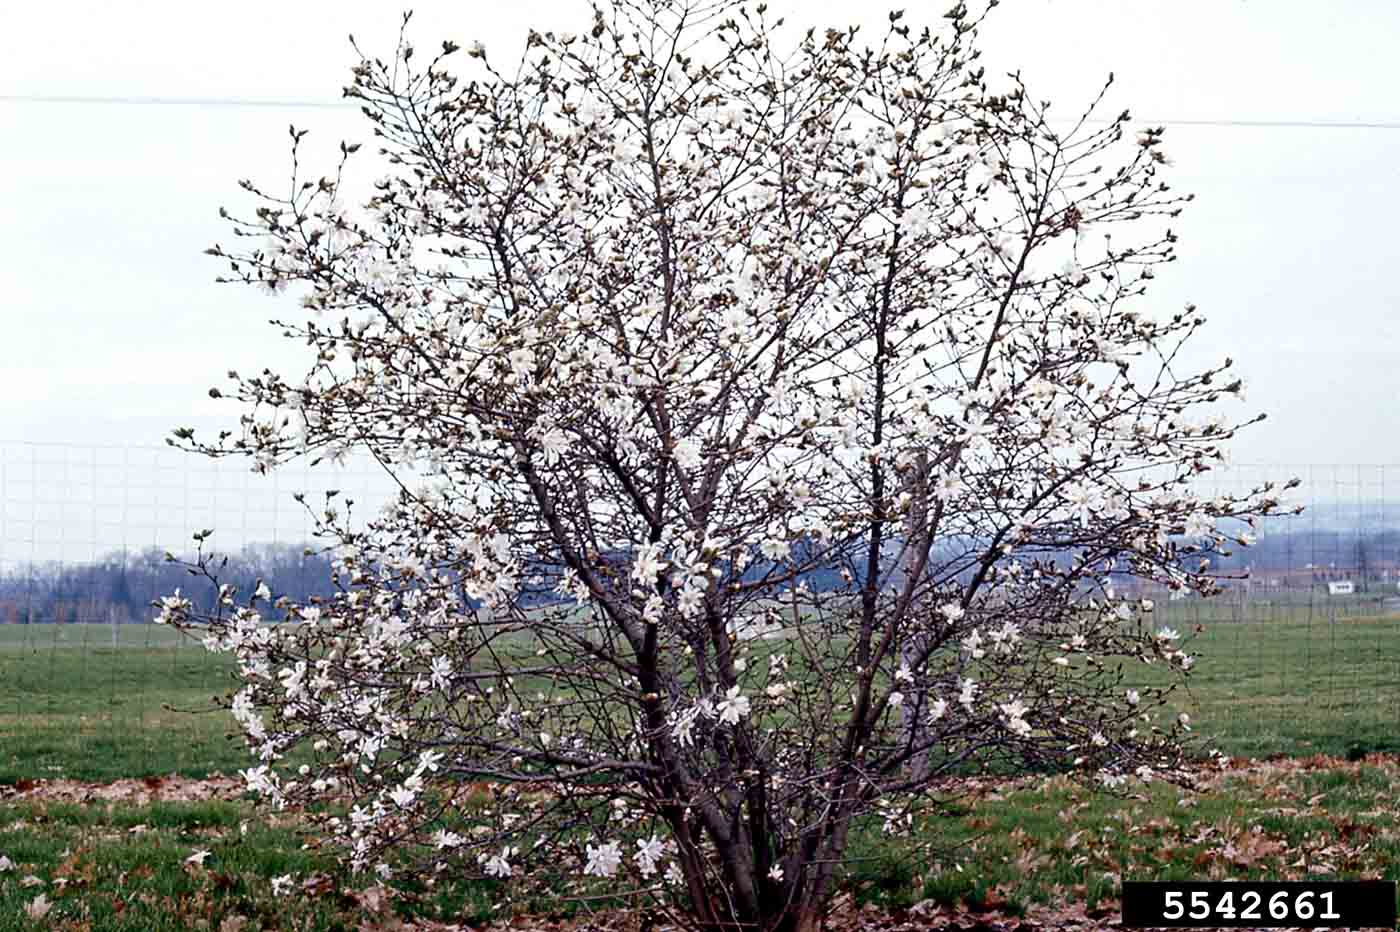 Star magnolia tree